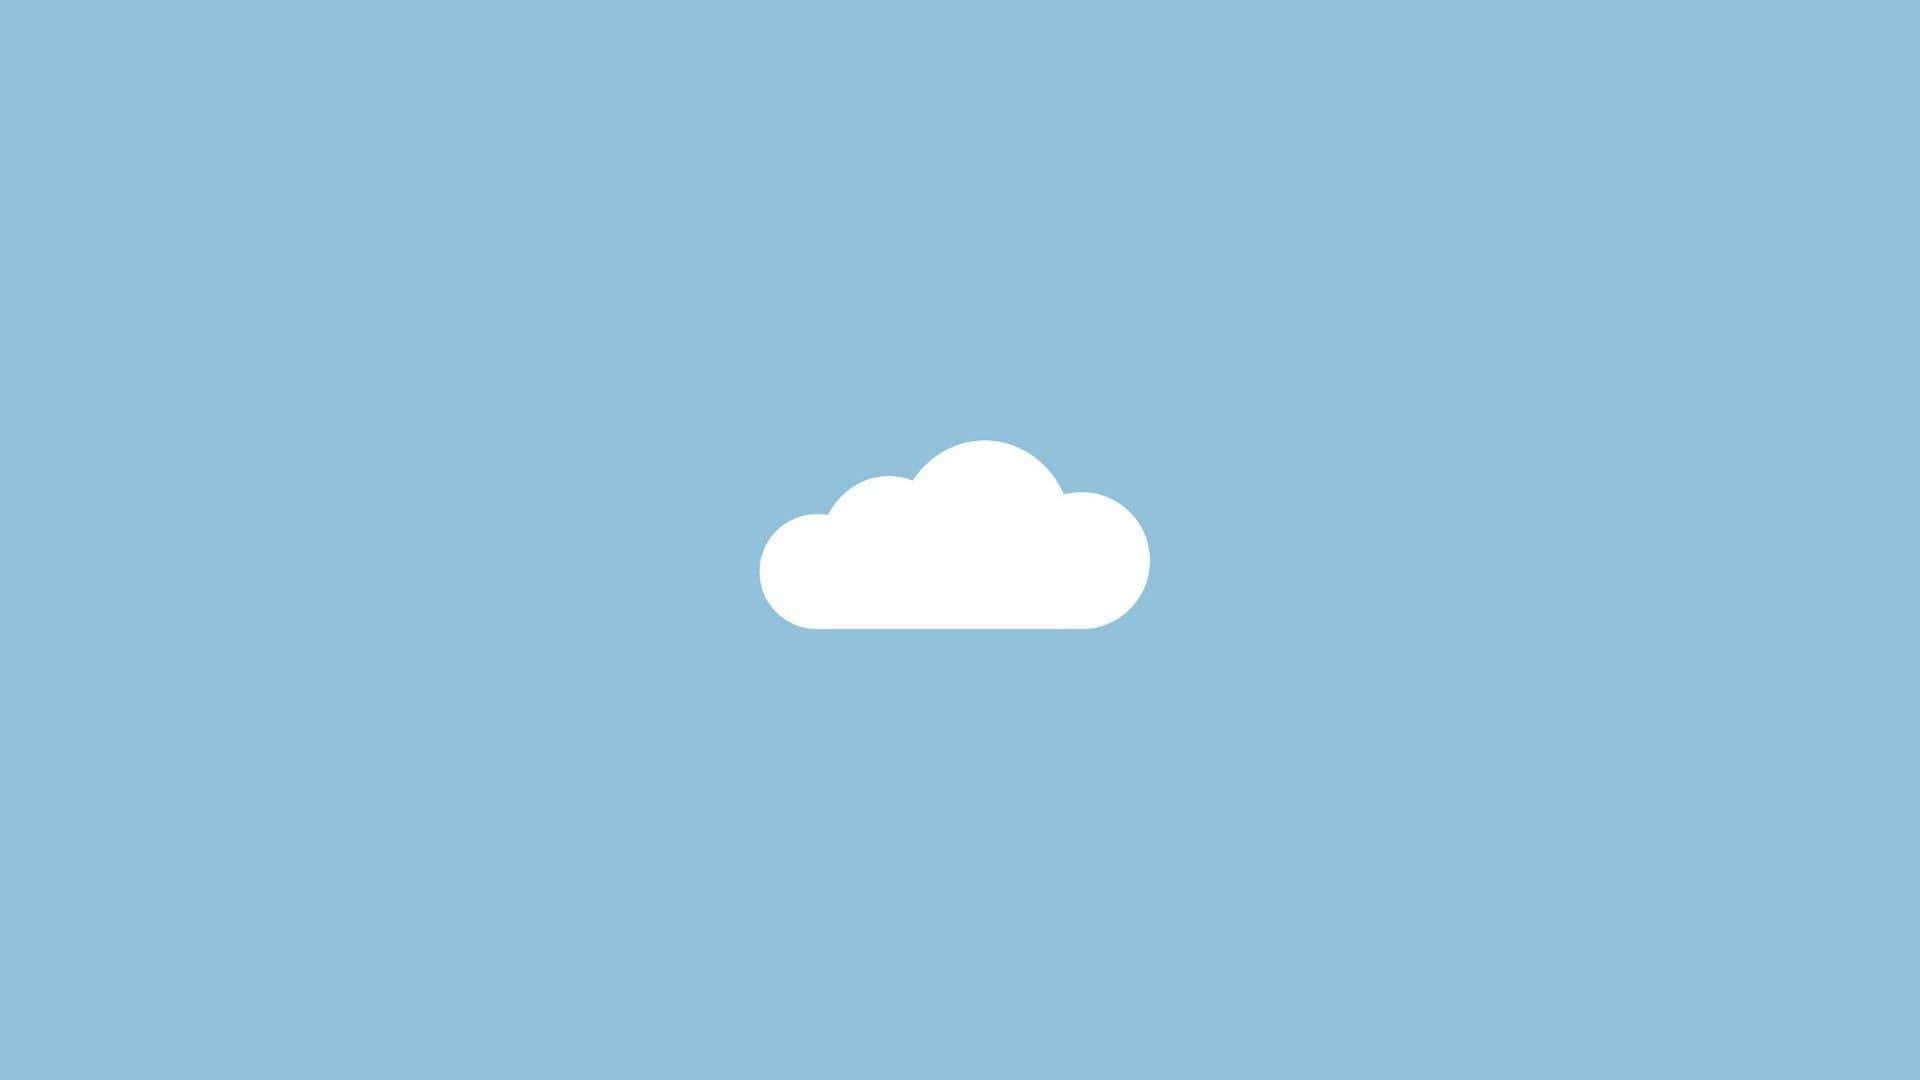 Aesthetic Light Blue Illustration Of Cloud Background